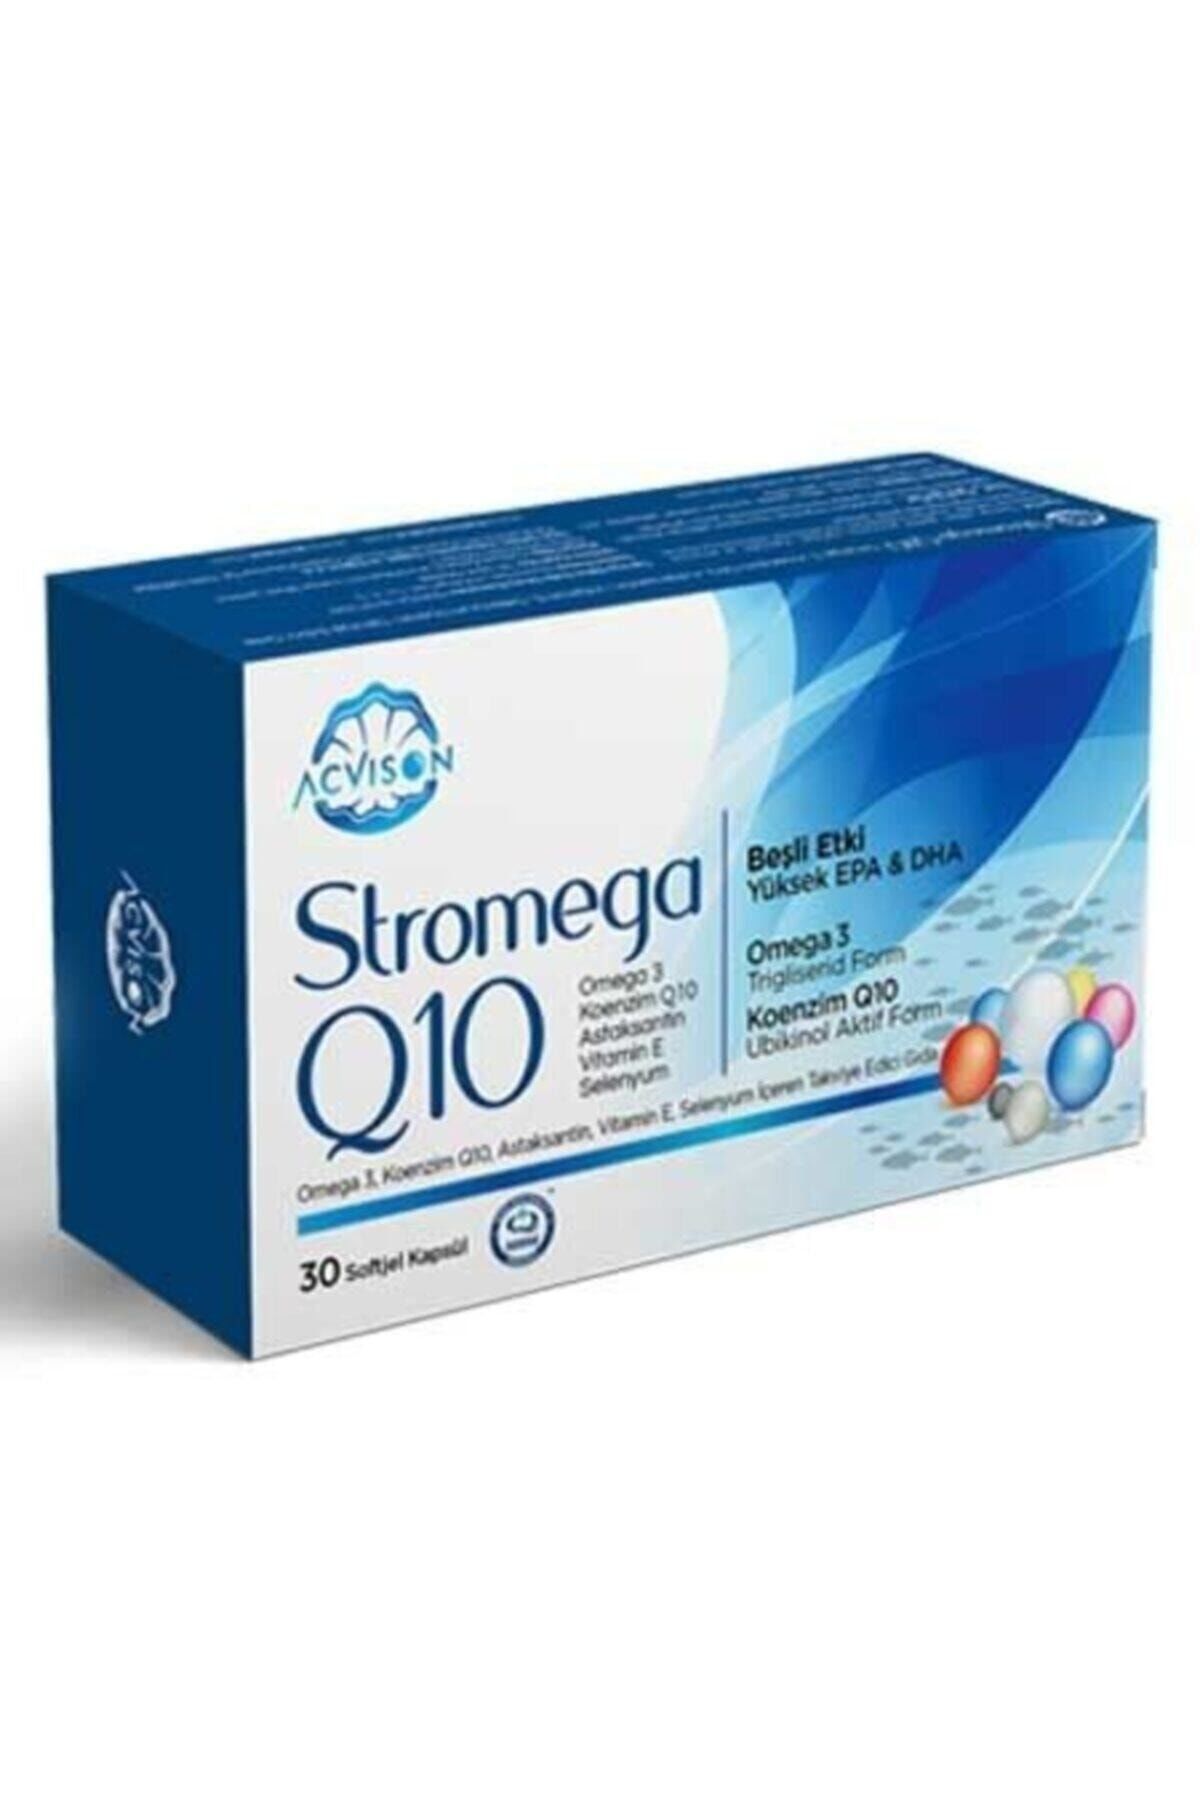 Stromega Q10 30 Softjel Kapsül